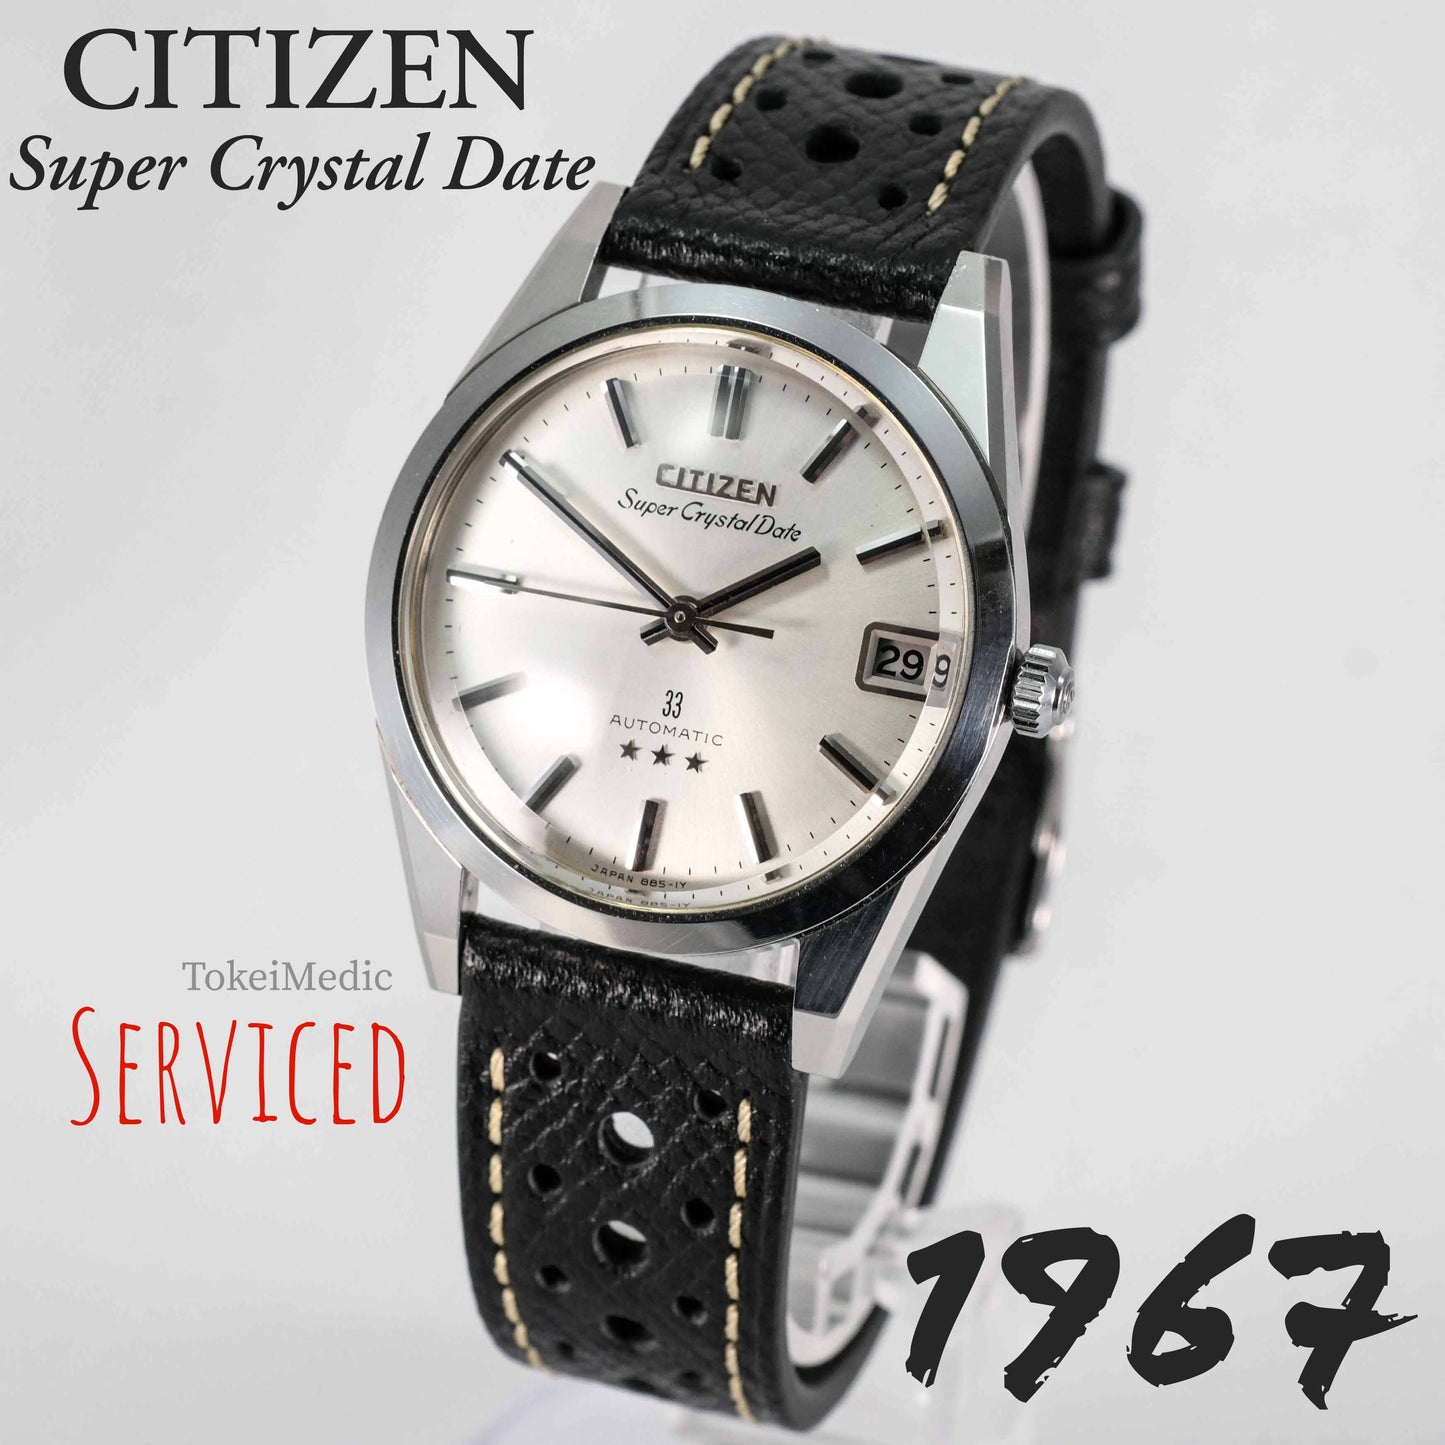 1967 Citizen Super Crystal Date AUDS2803-Y